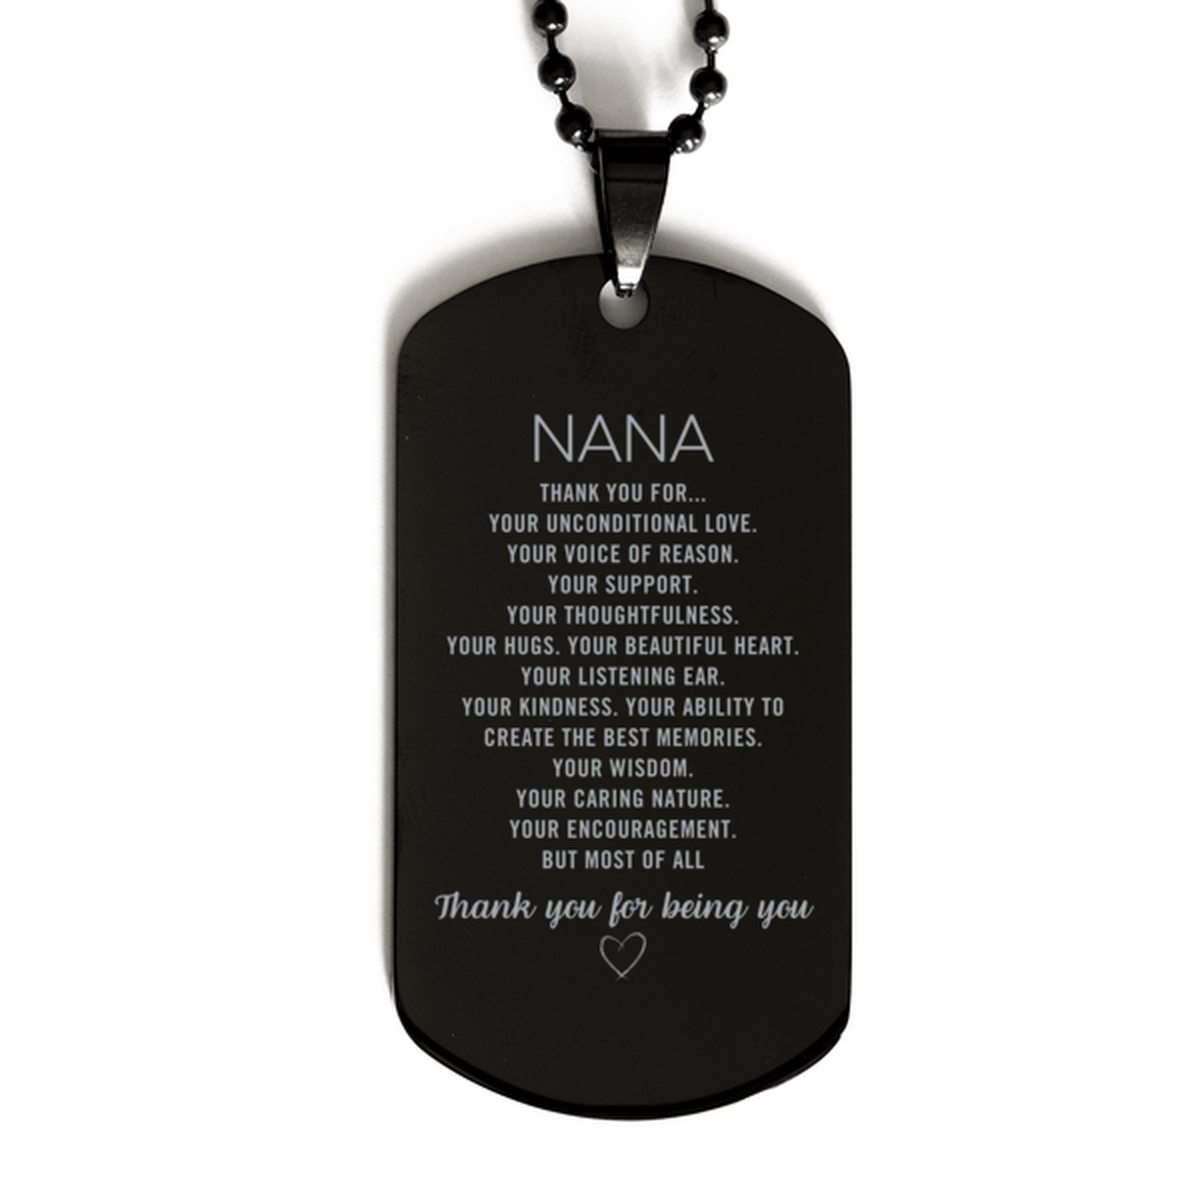 Nana Black Dog Tag Custom, Engraved Gifts For Nana Christmas Graduation Birthday Gifts for Men Women Nana Thank you for Your unconditional love